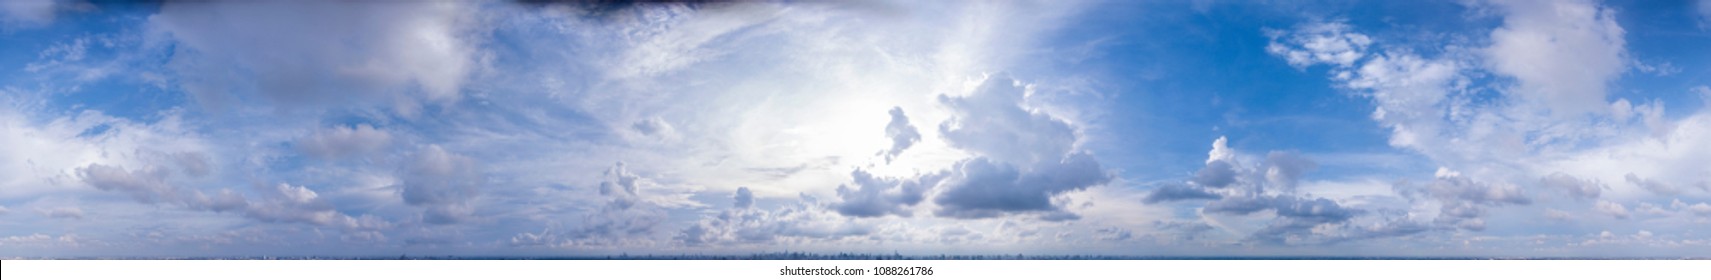 360 Seamless Cloudy Sky Panorama in Spherical (Equirectangular) format - Bangkok Thailand